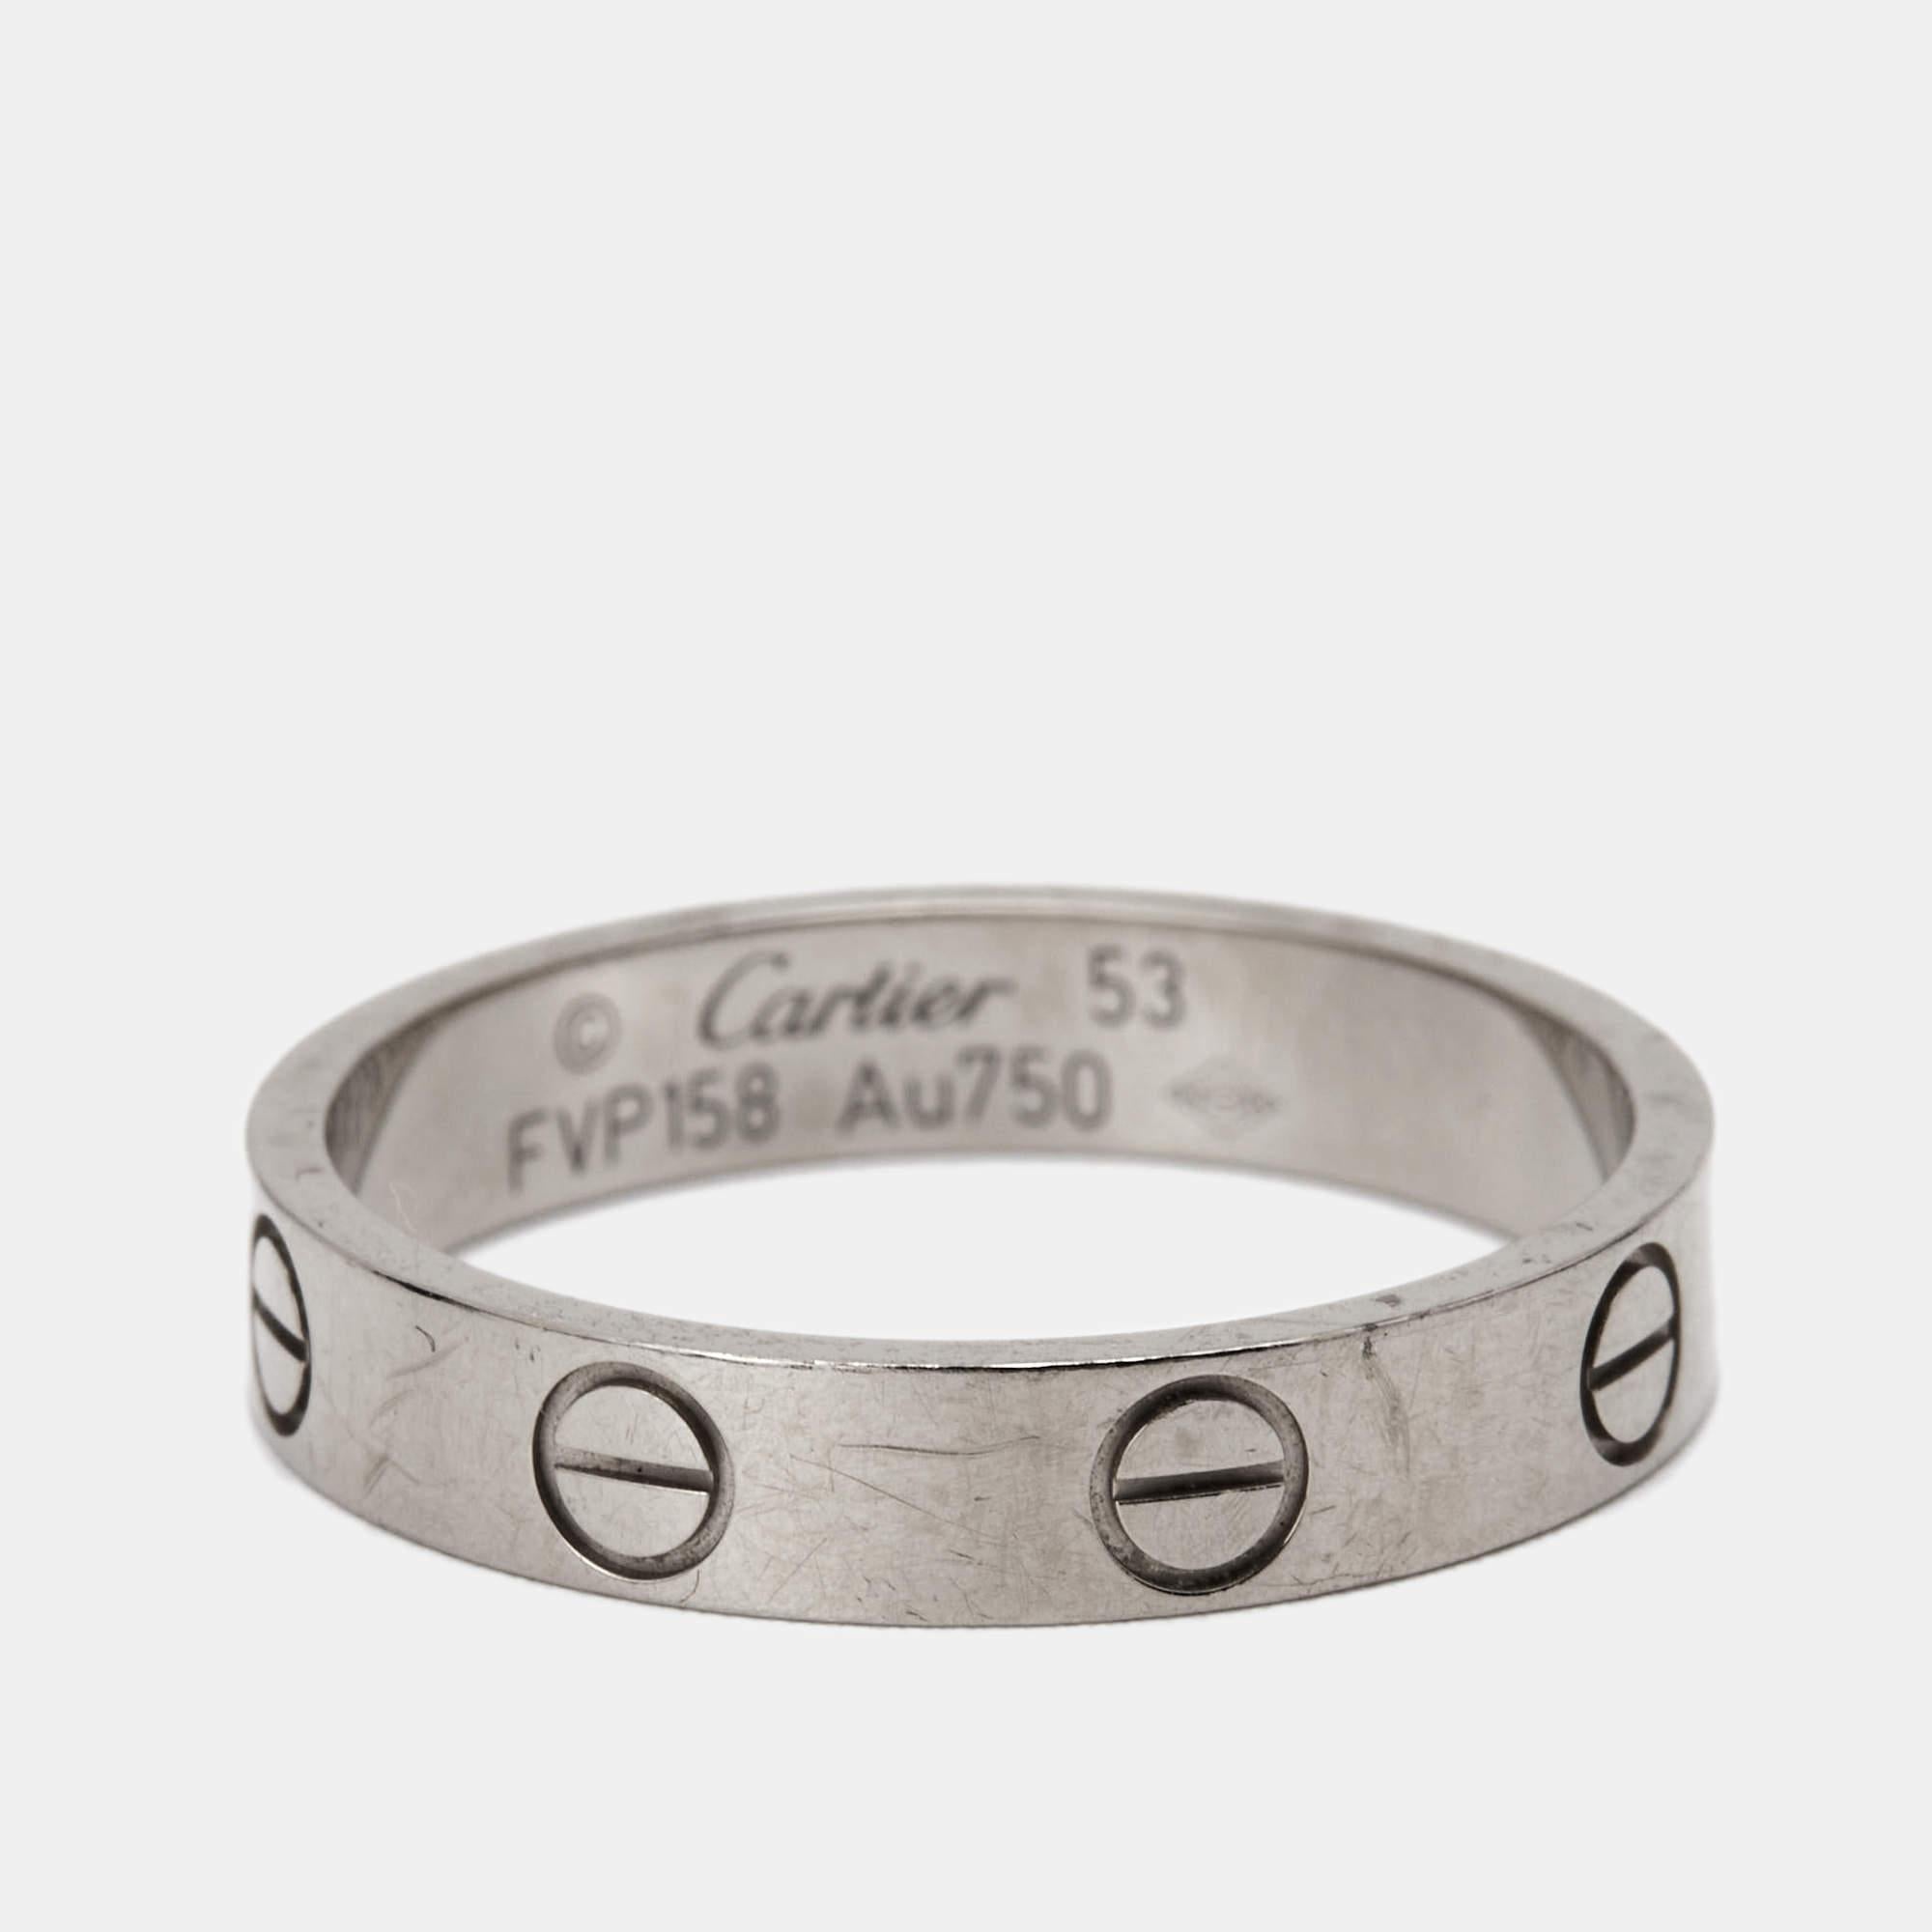 Women's Cartier Love 18K White Gold Narrow Wedding Band Ring Size 53